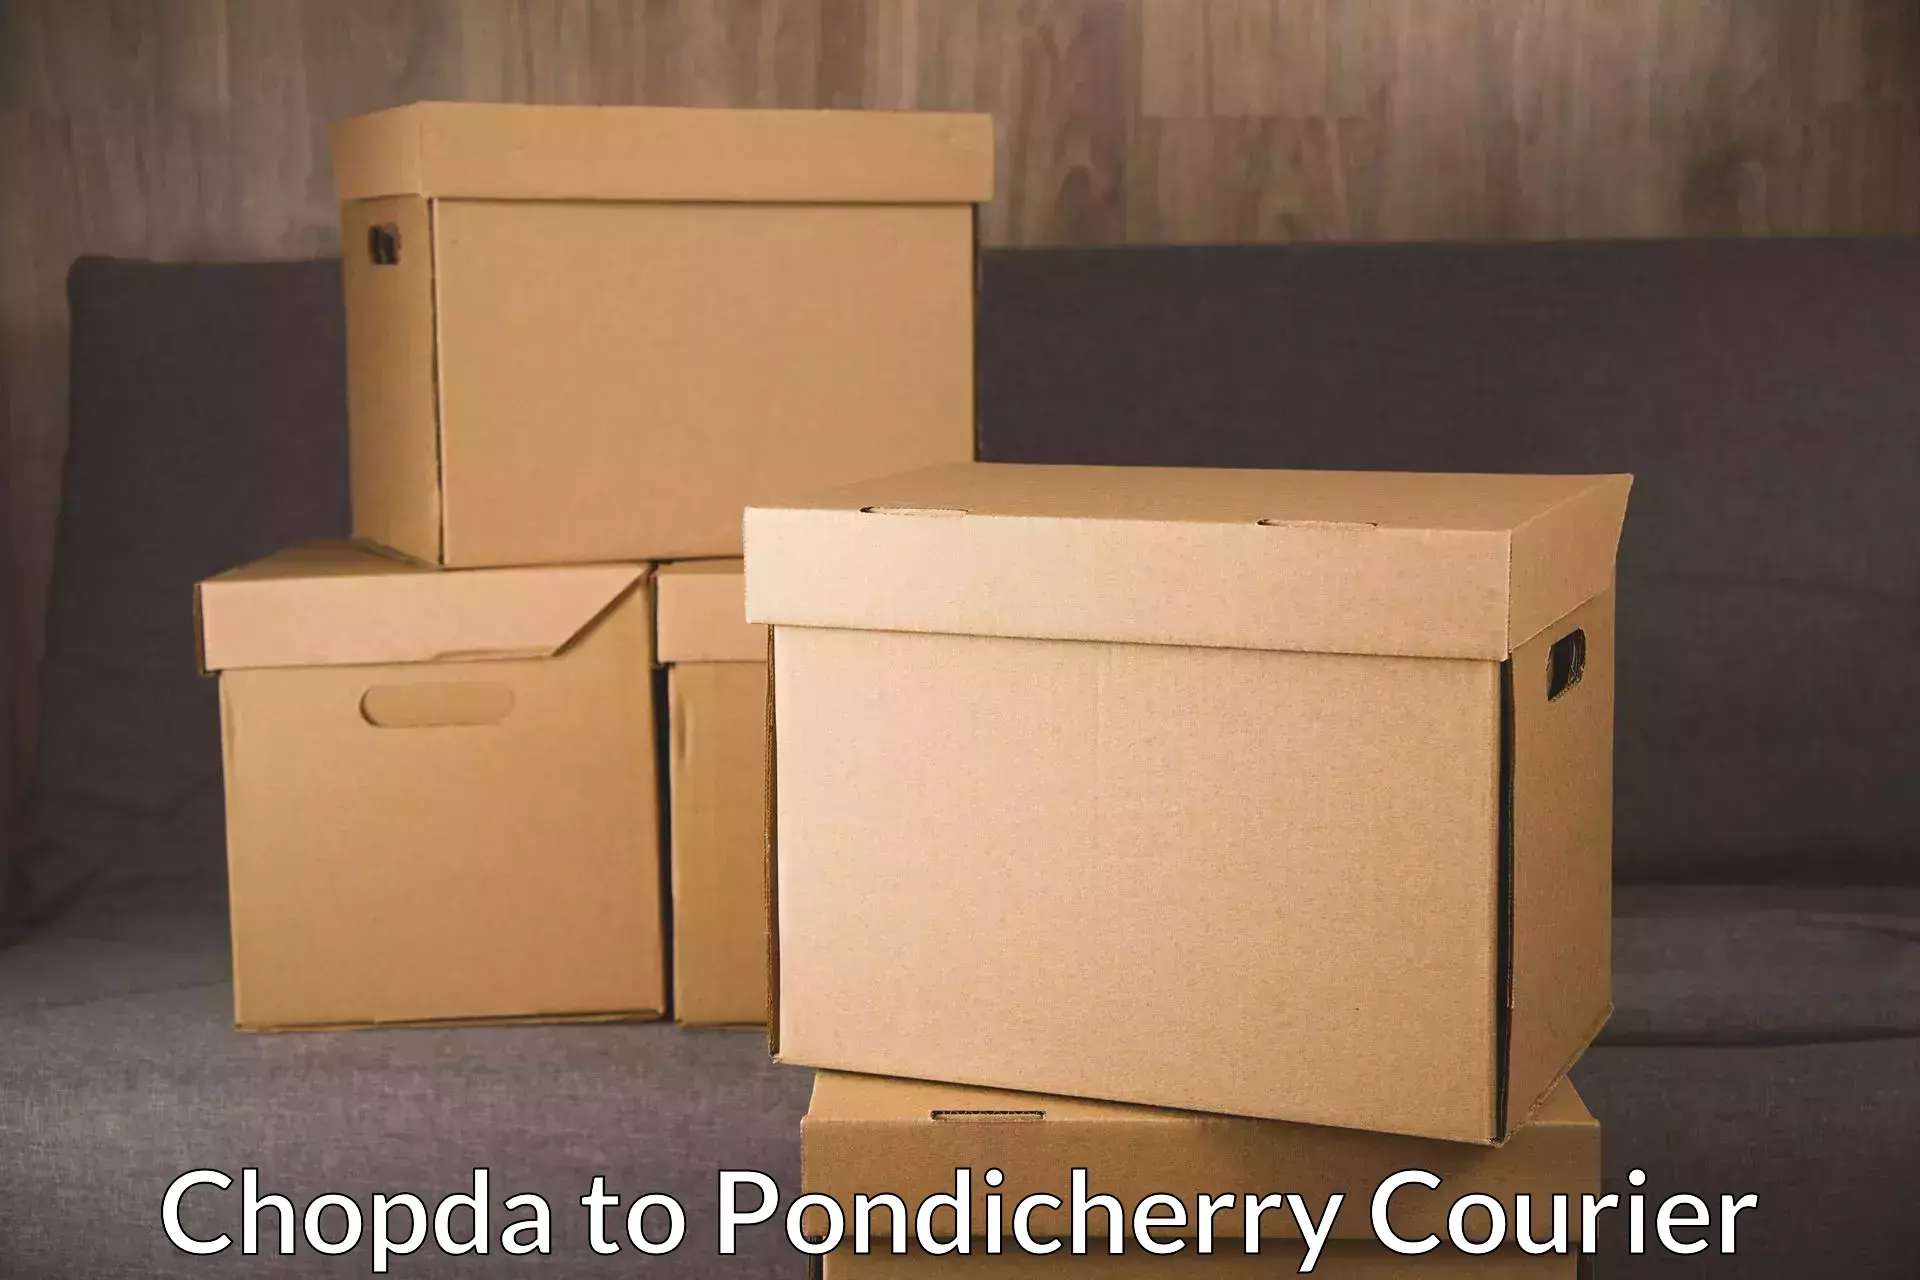 Express postal services Chopda to Pondicherry